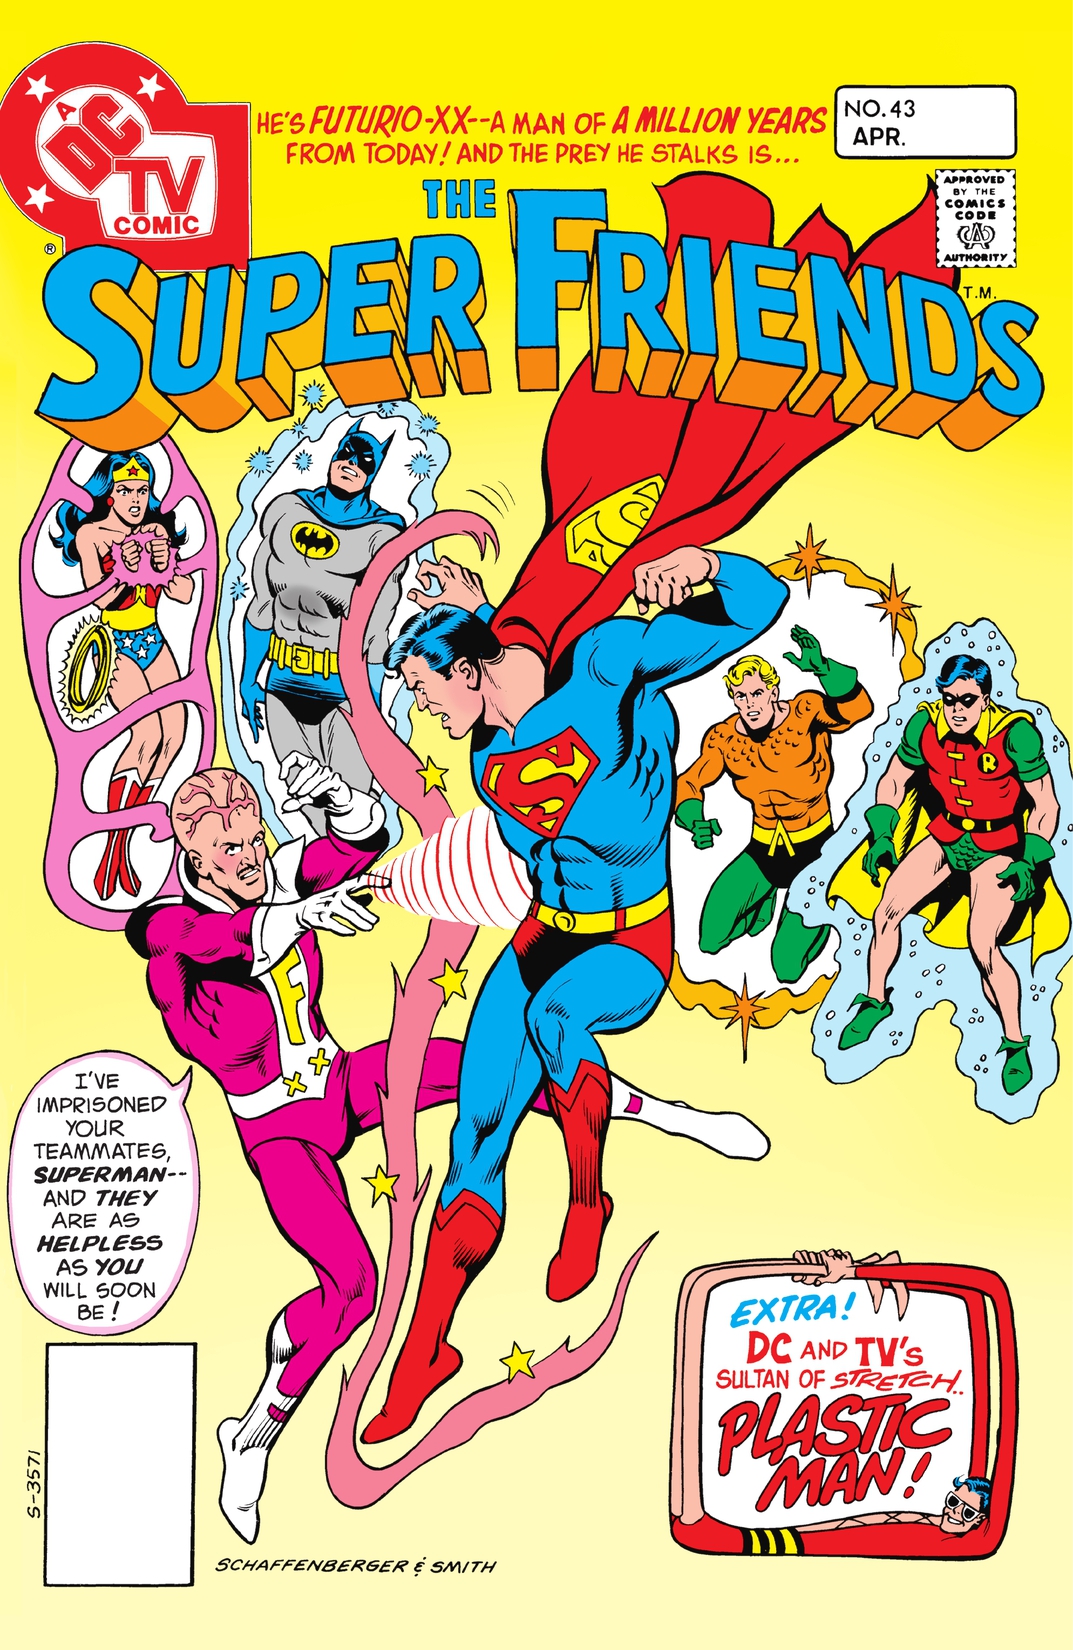 Super Friends (1976-1981) #43 preview images